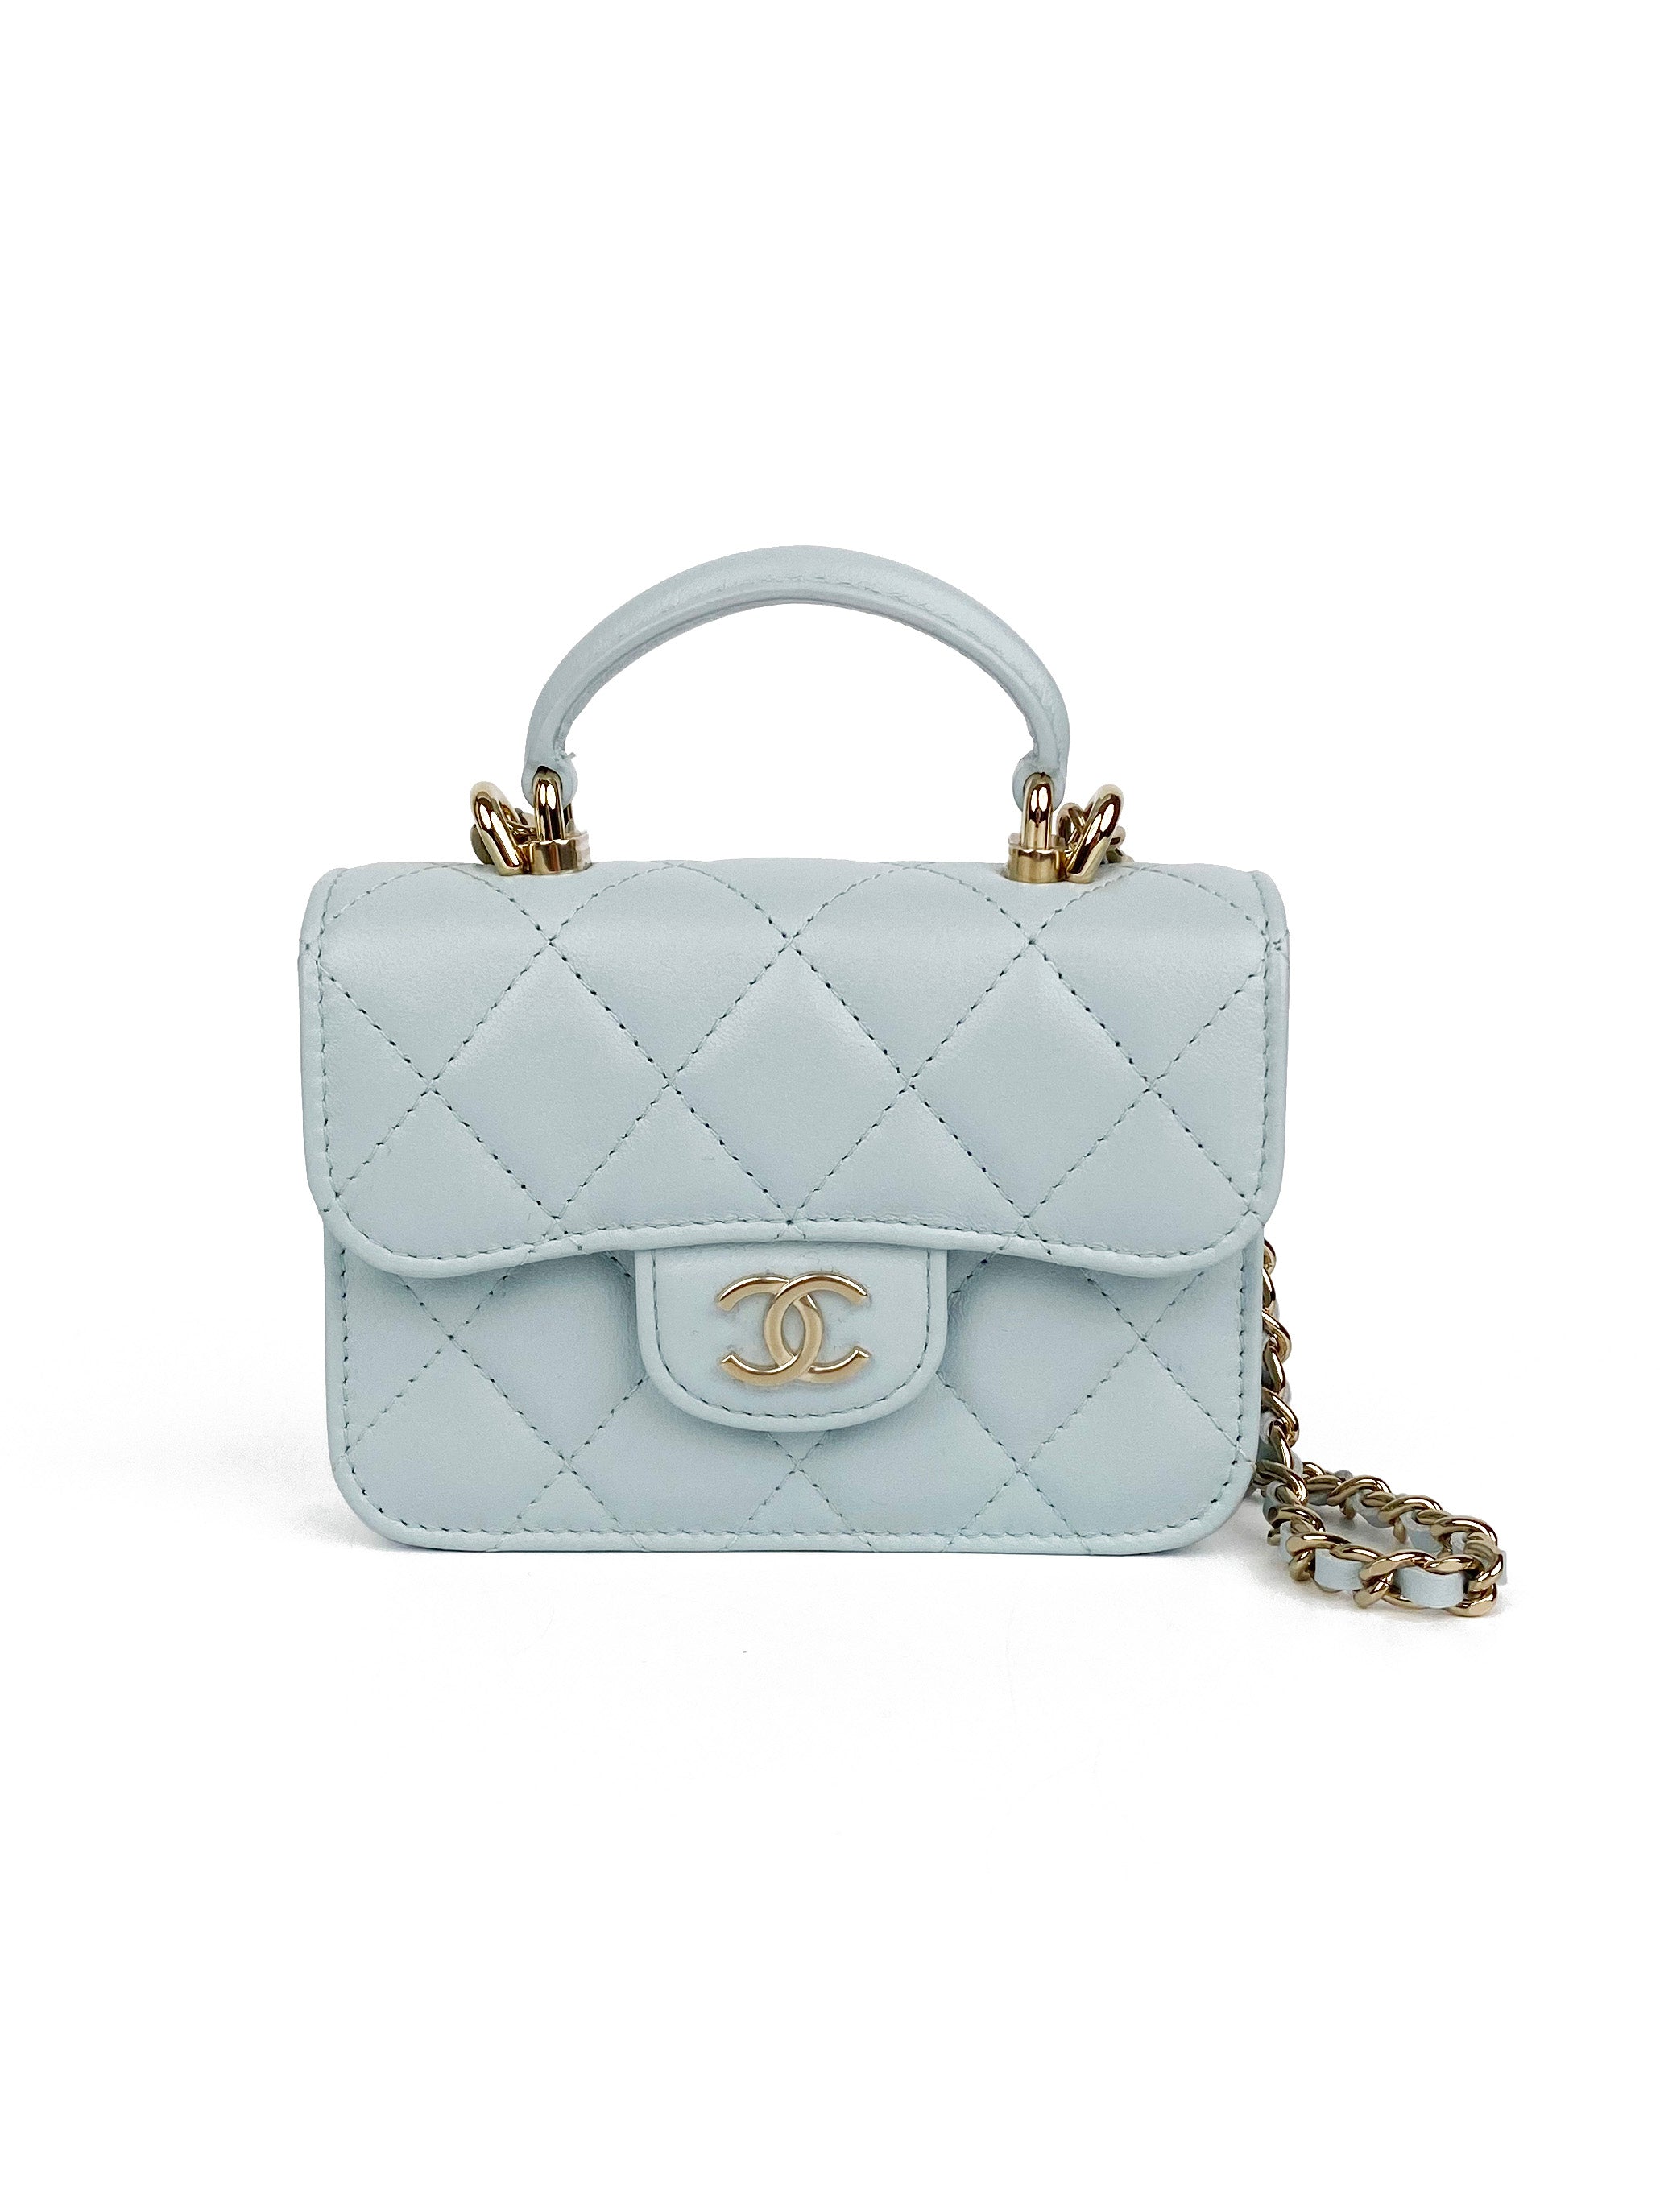 Chanel Mini Light Blue Flap Bag with Handle